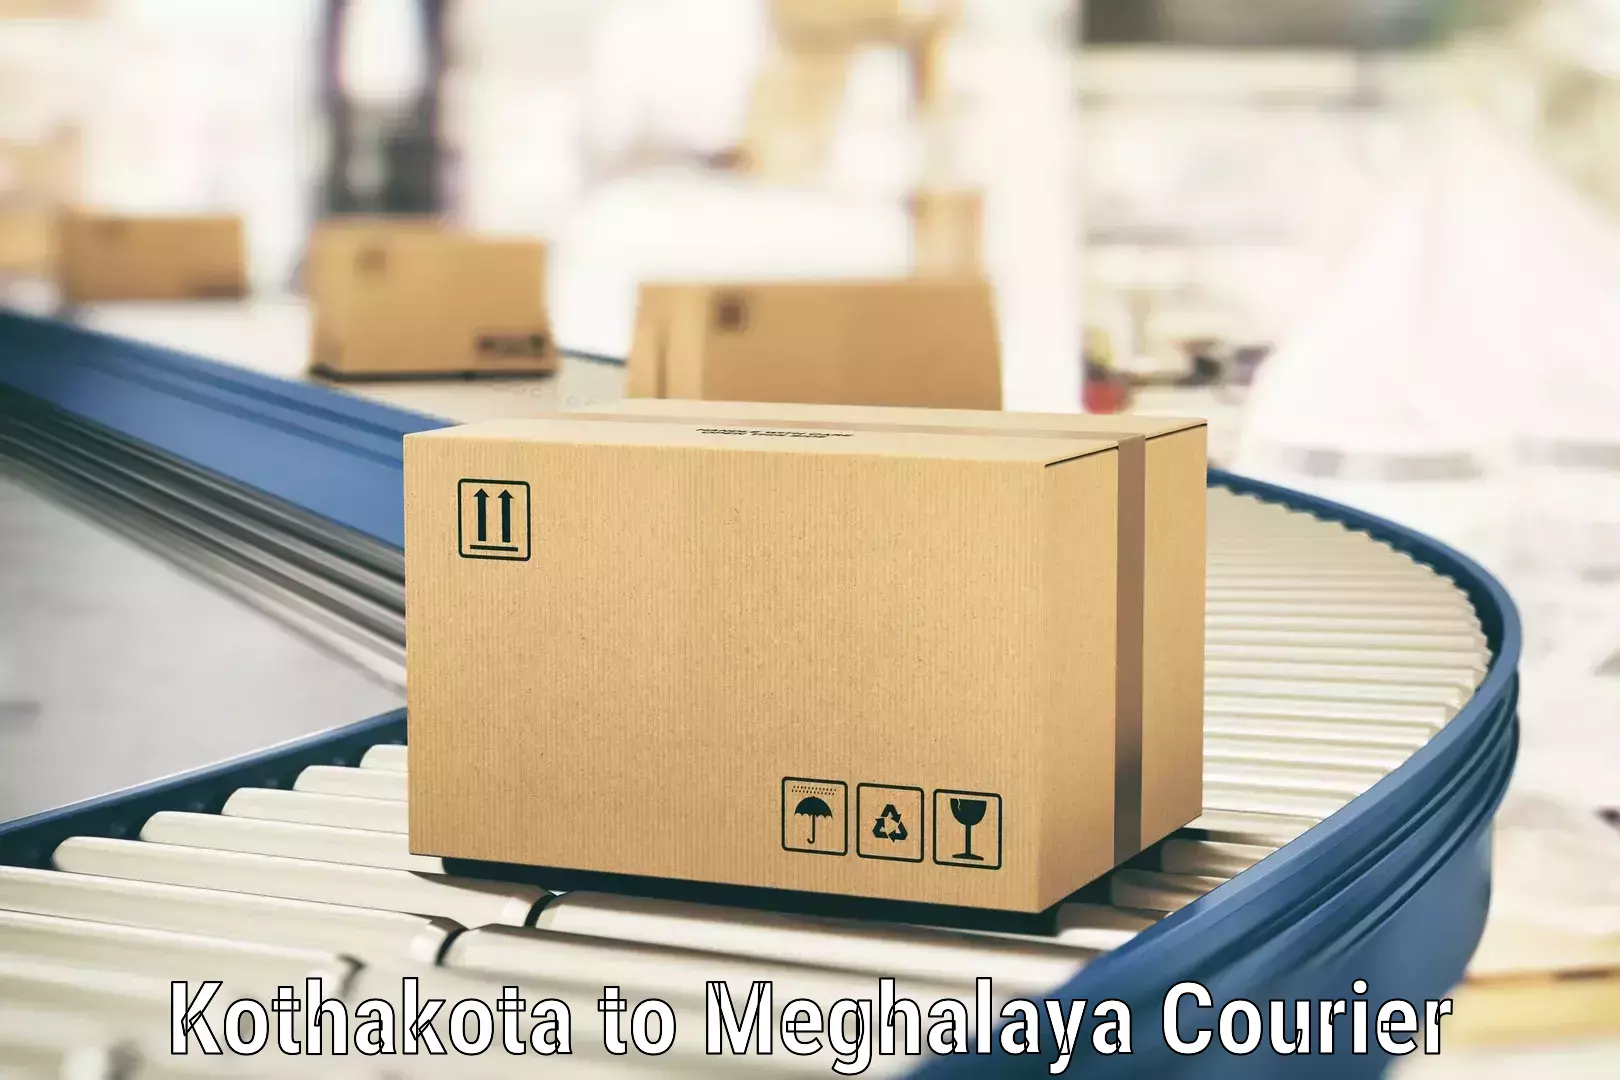 Package delivery network Kothakota to Meghalaya